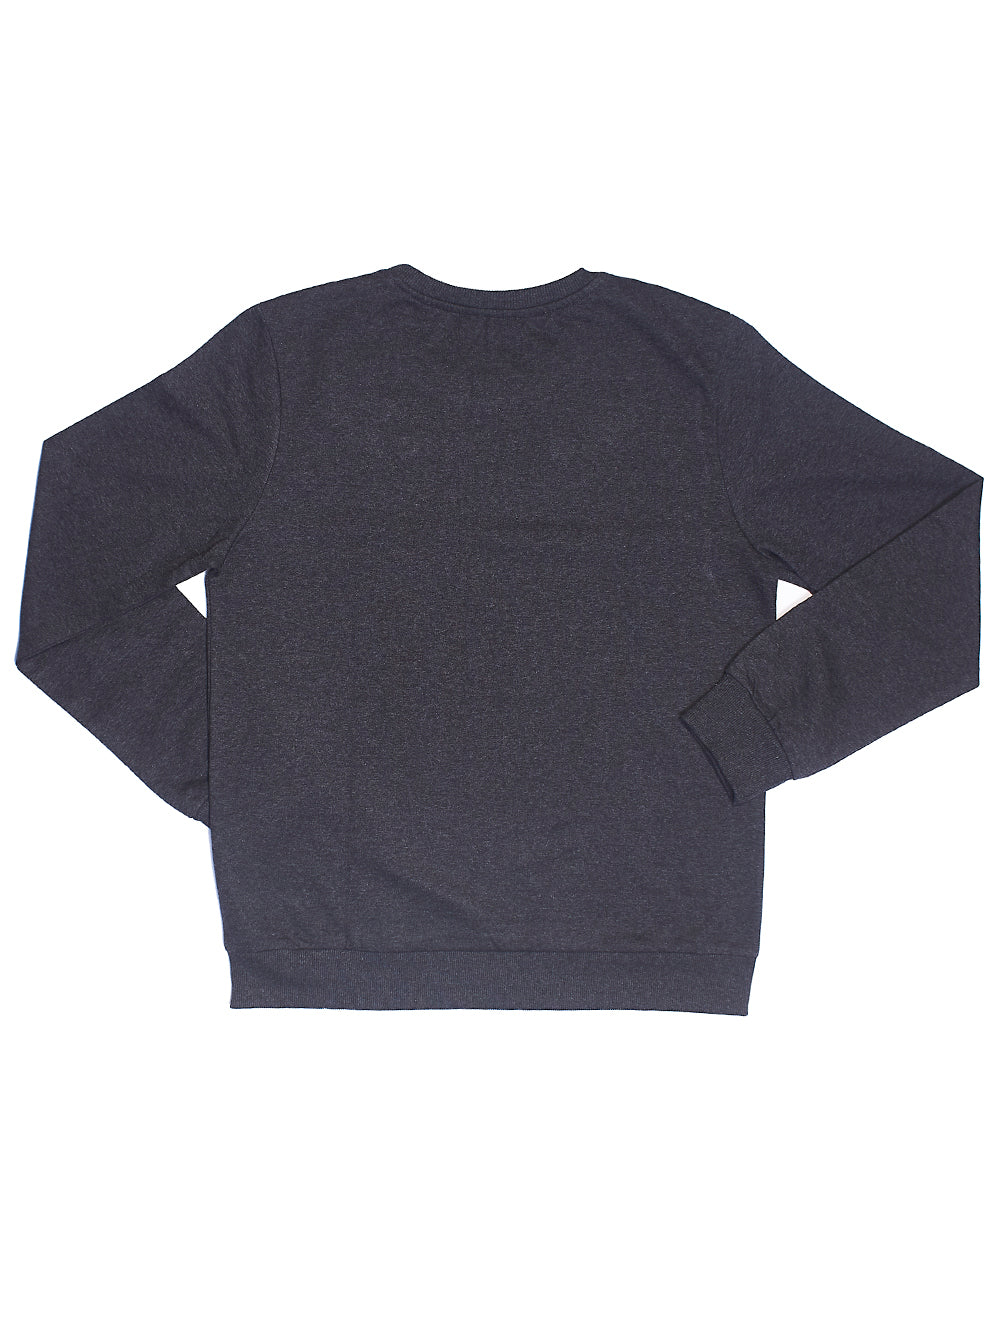 The Madura Sweatshirt Dark Grey